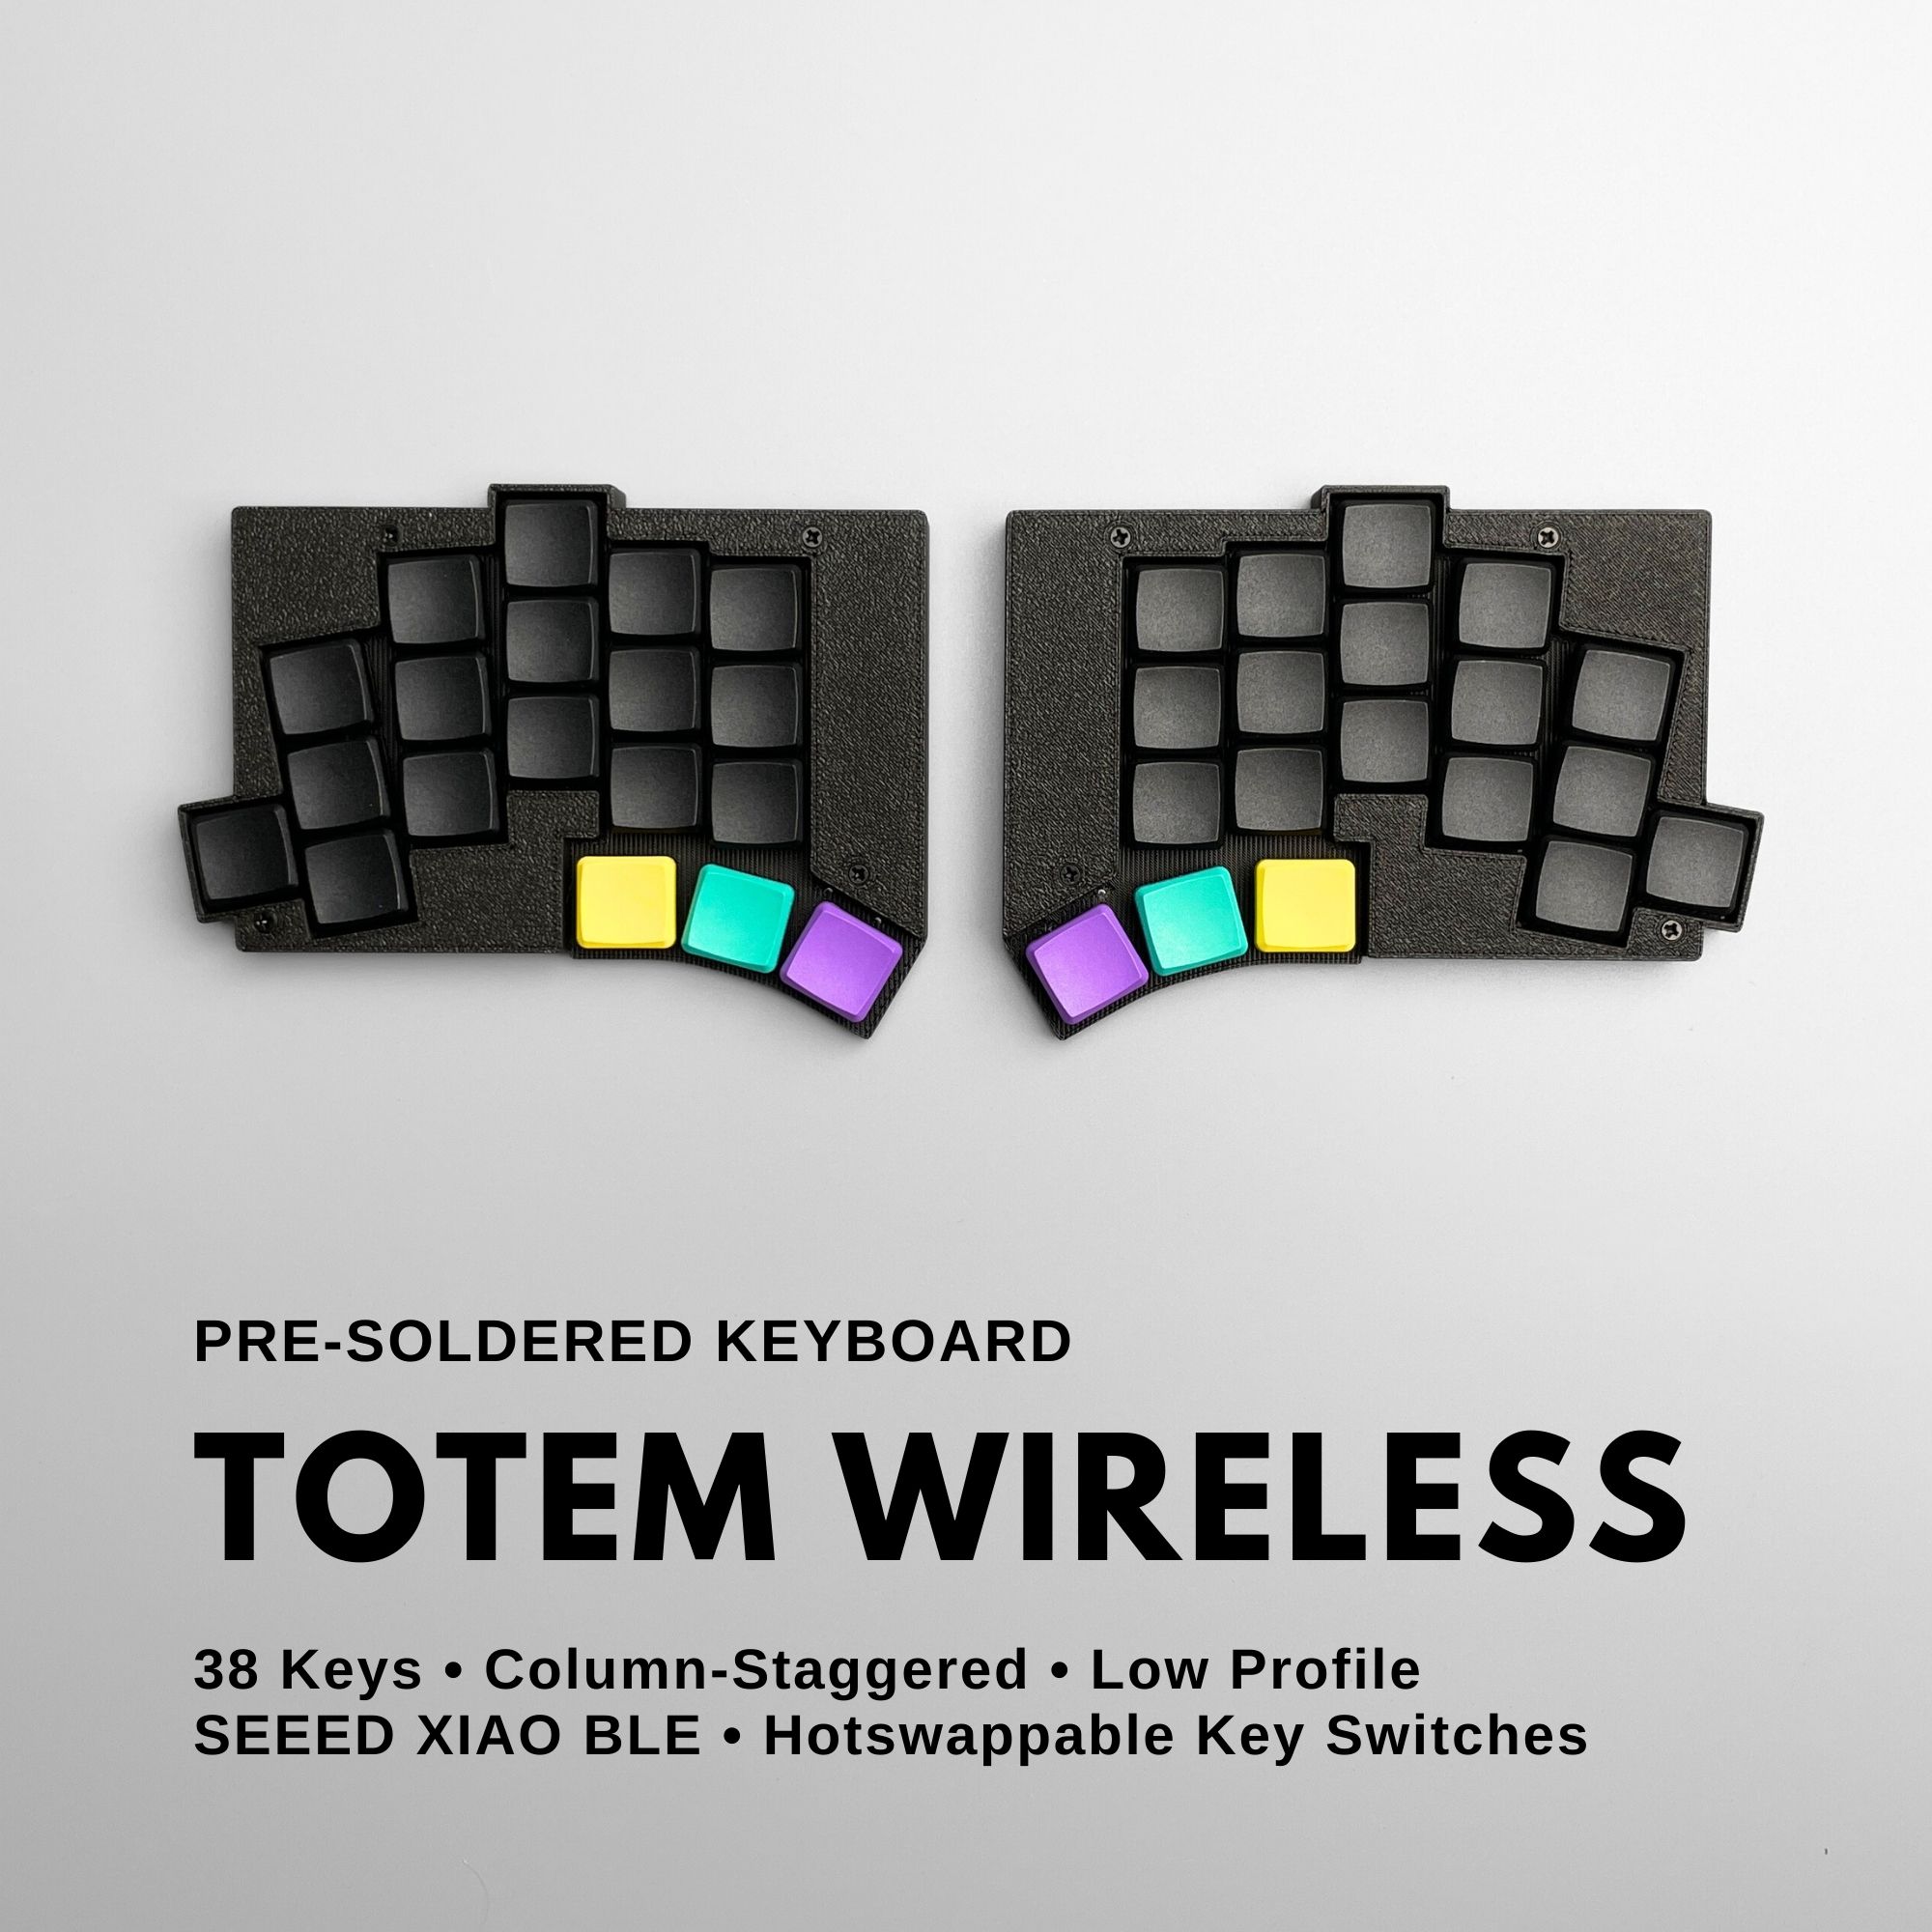 Prebuilt wireless TOTEM keyboard